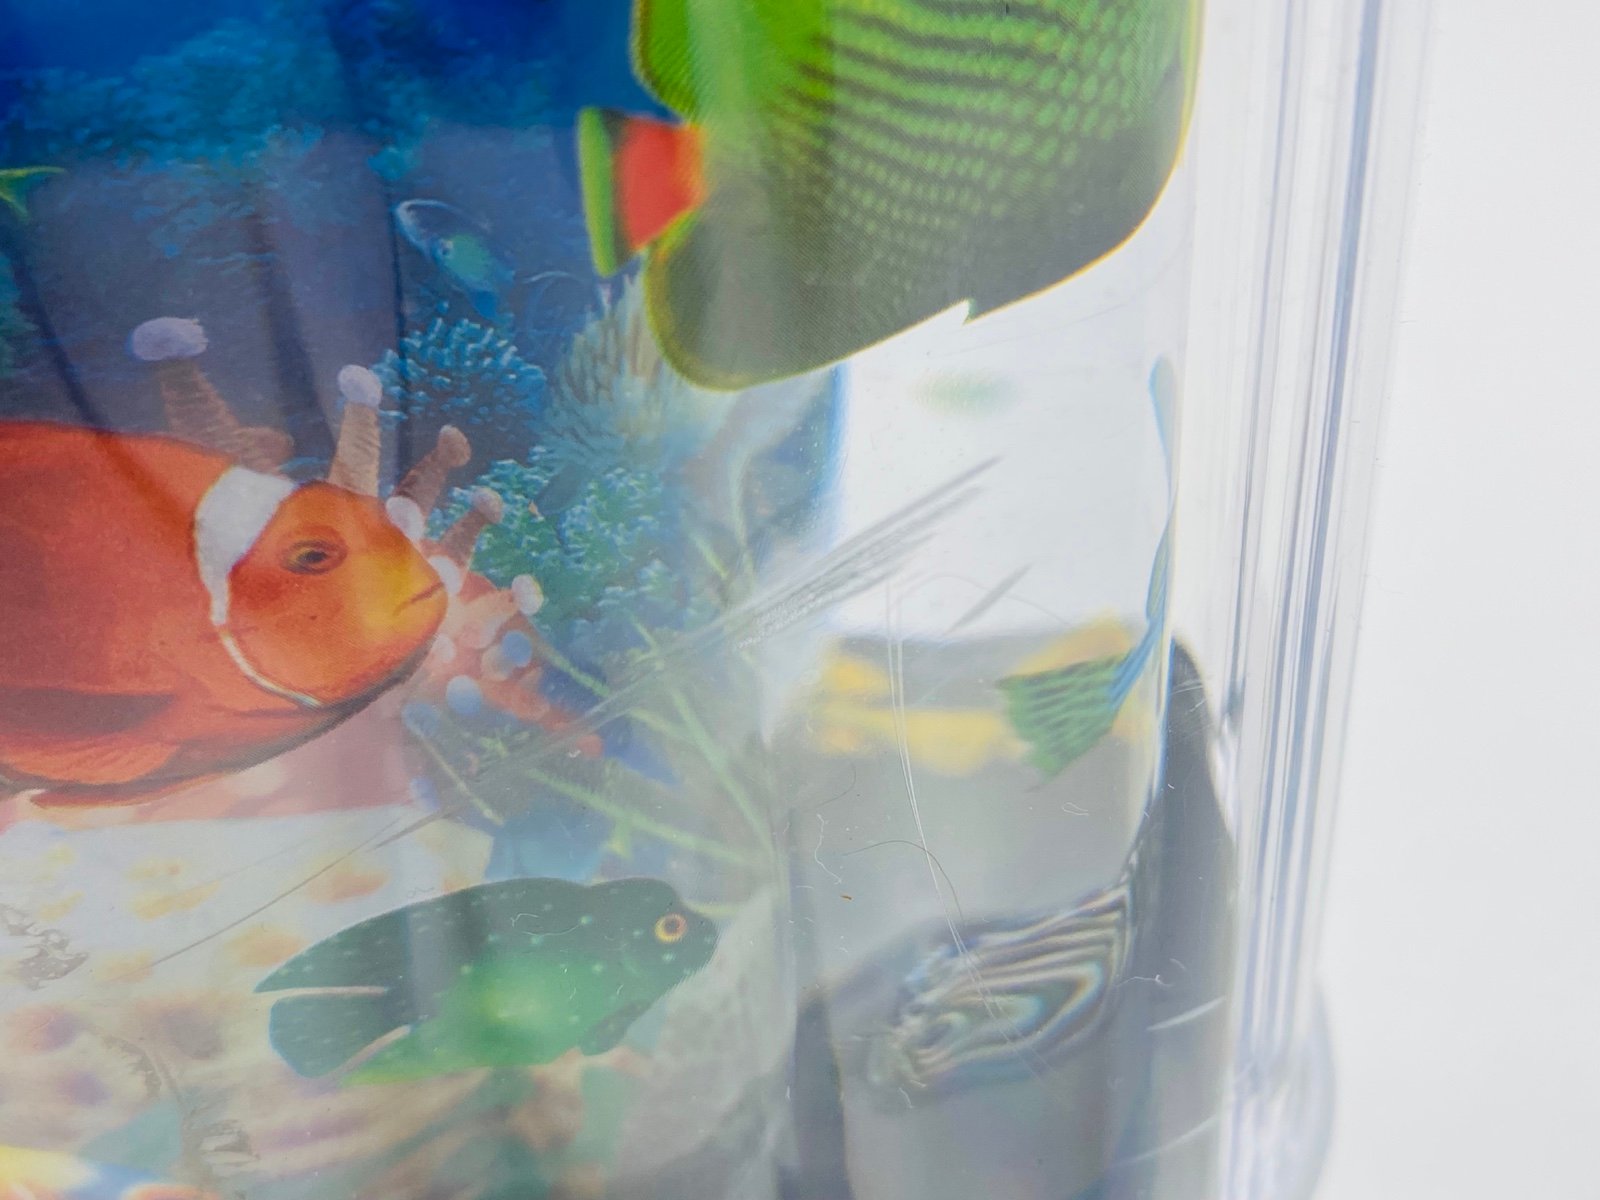 Artificial Aquarium Toy For Kids Virtual Ocean Tropical Fish Tank Small Decor US 5RNqJ4Grn